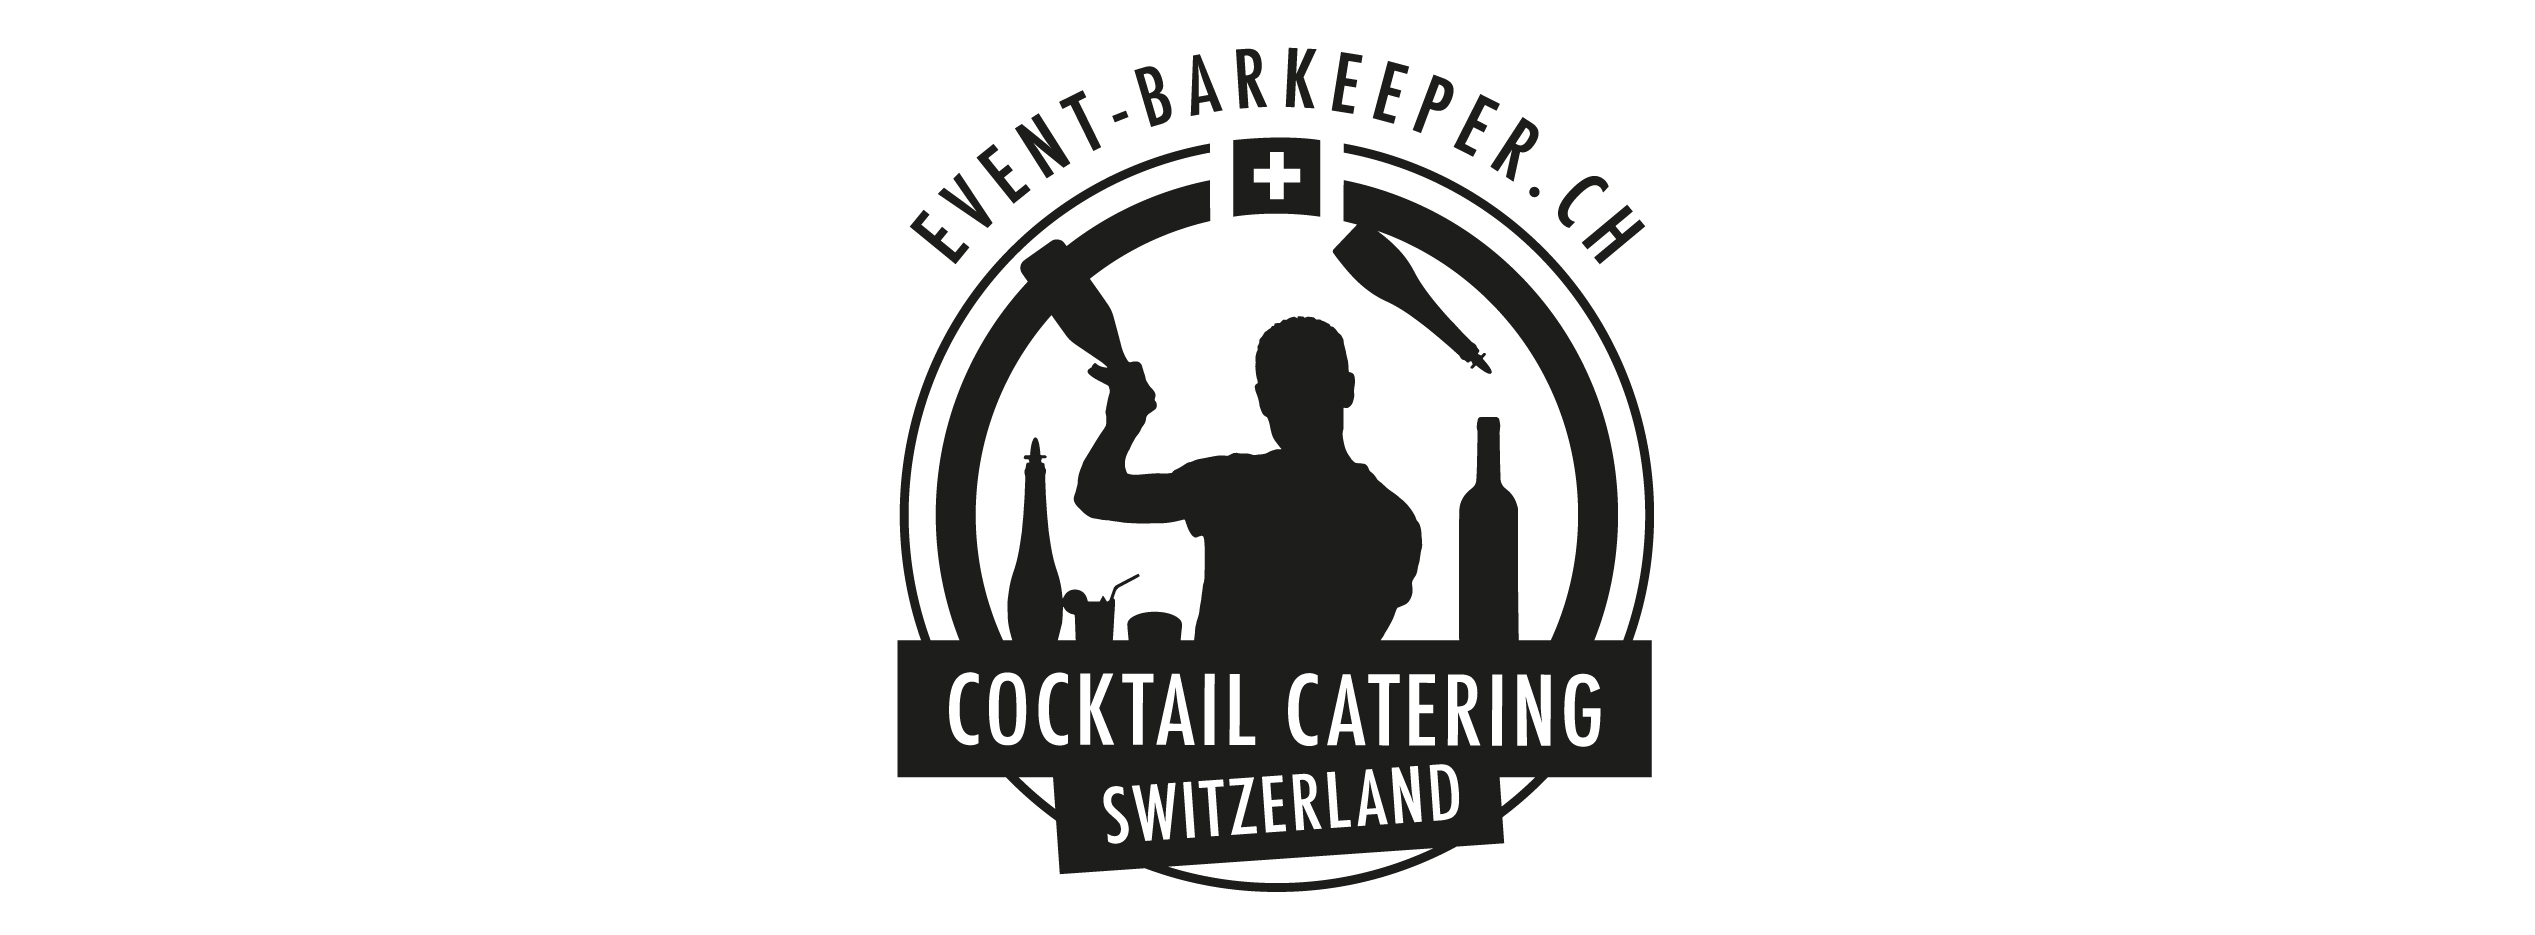 event-barkeeper